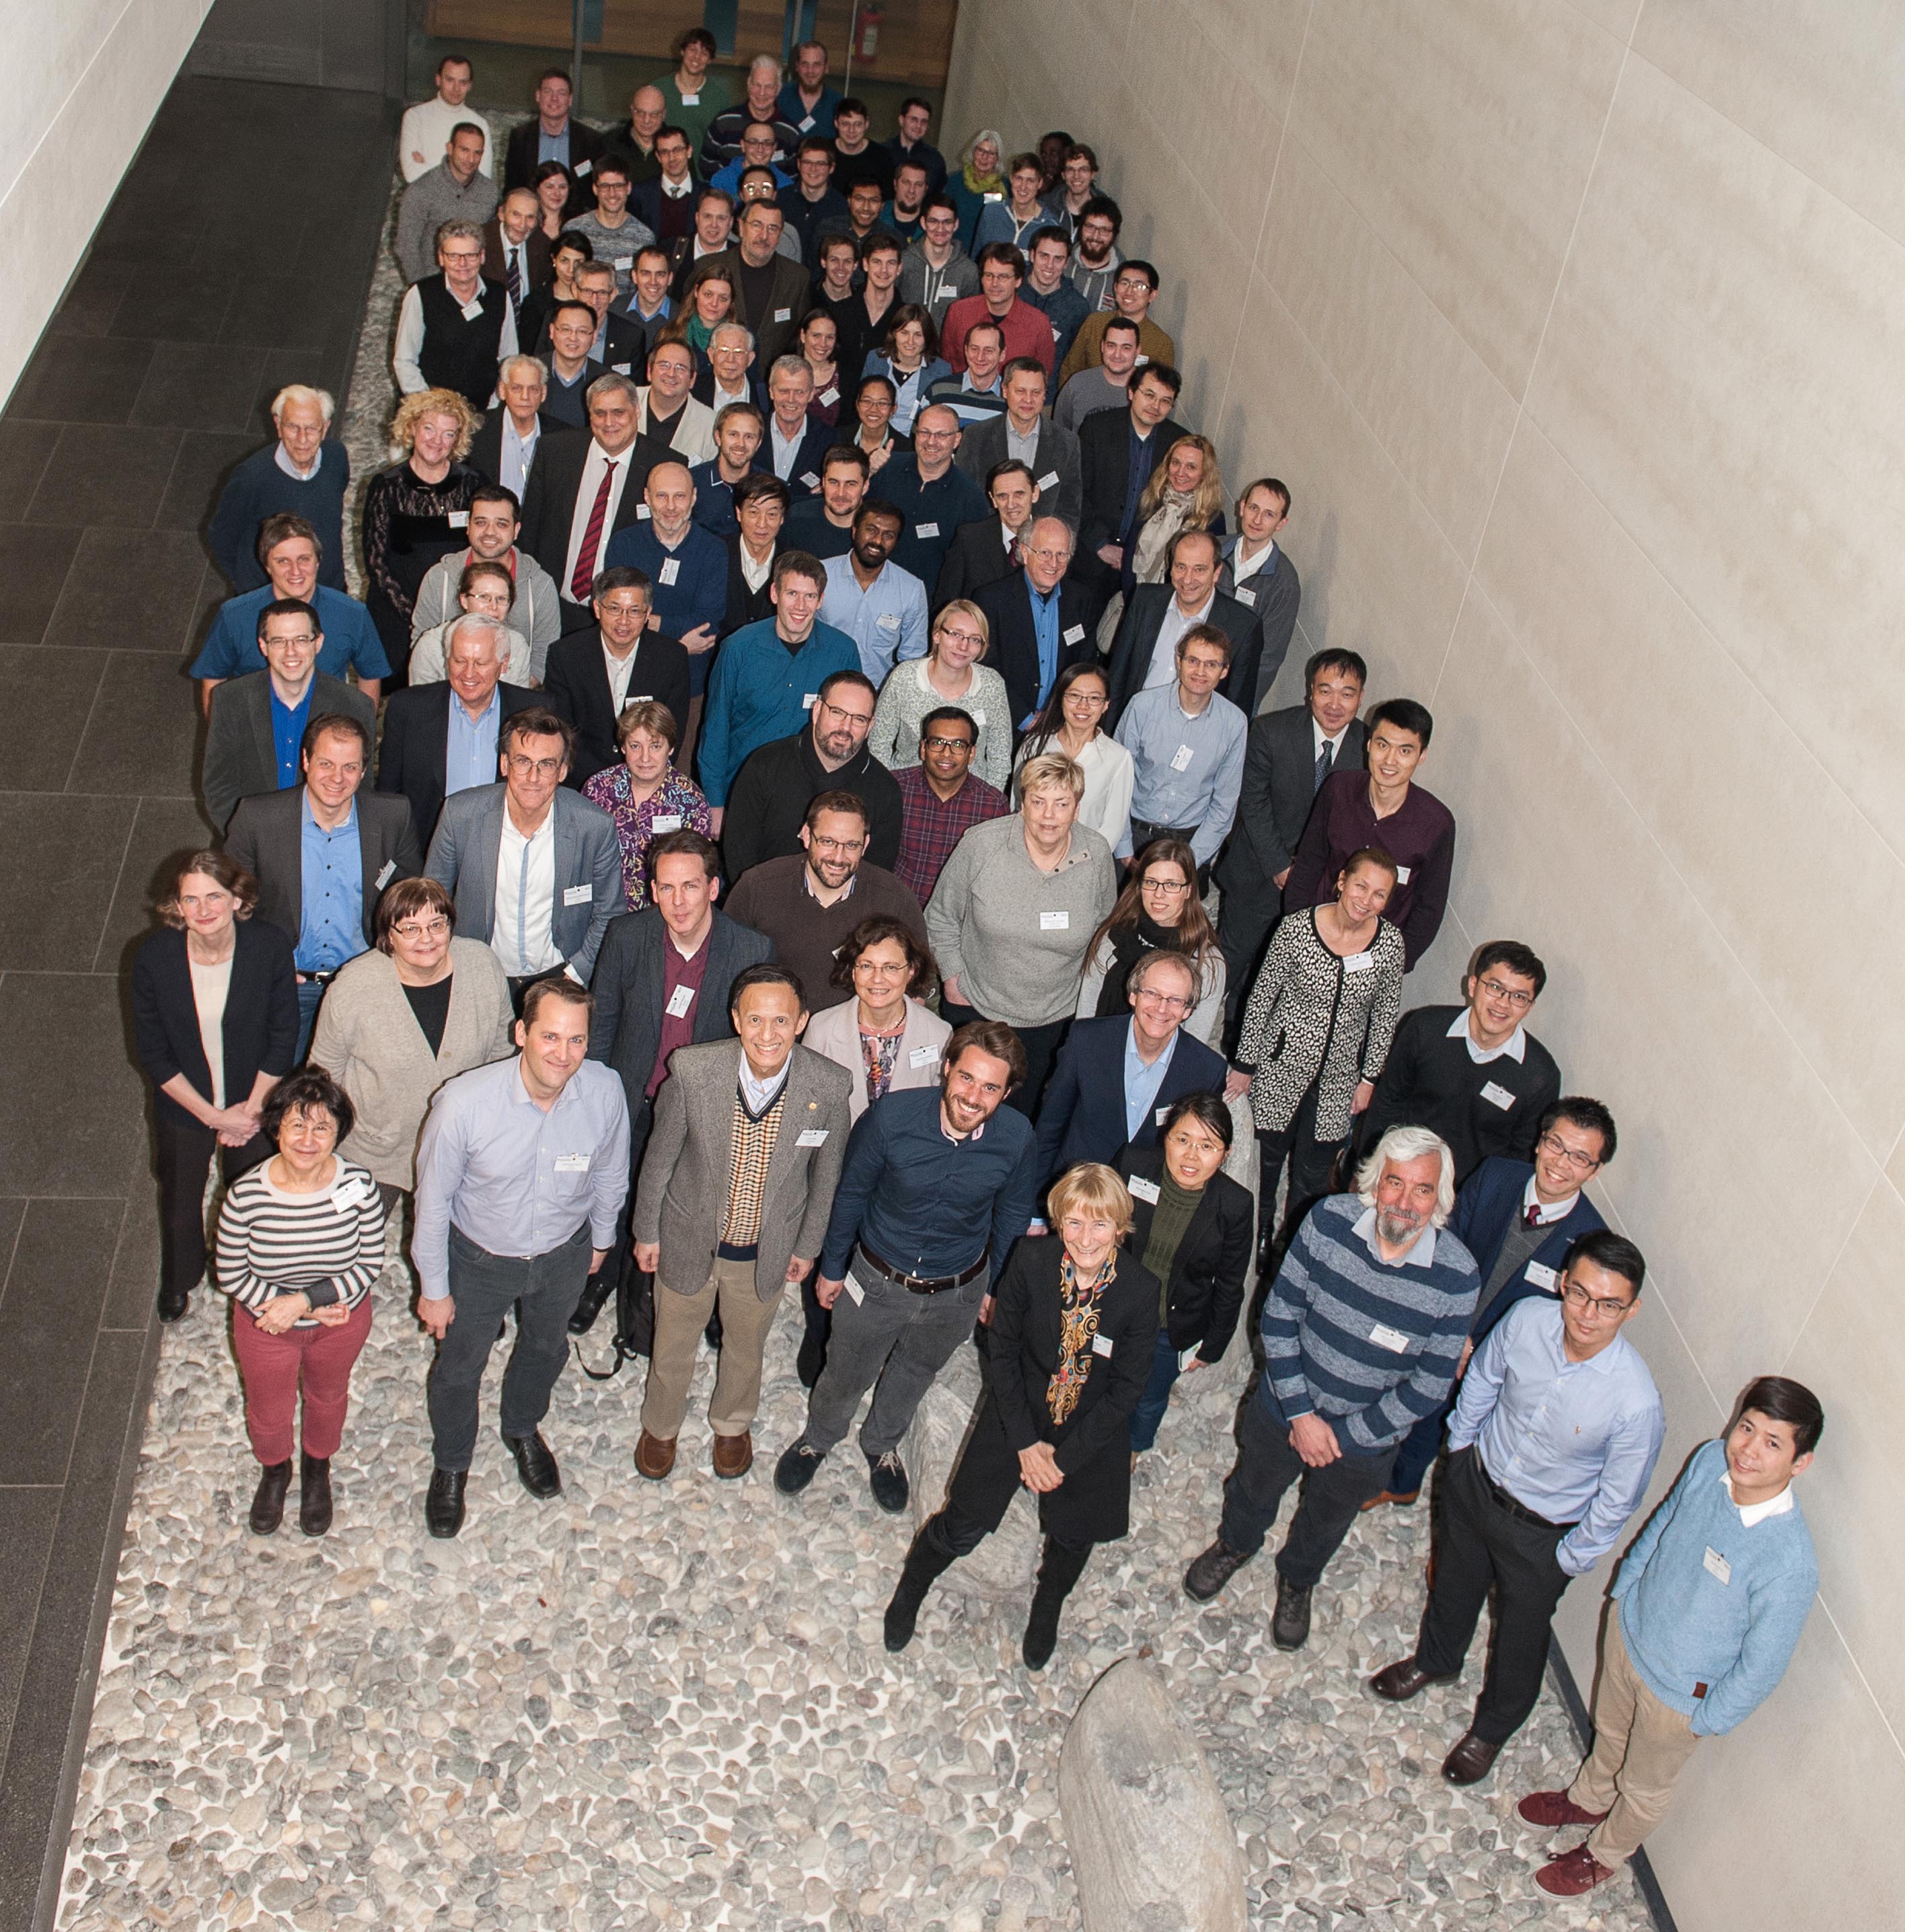 Group photo of participants of SALVE symposium 2017